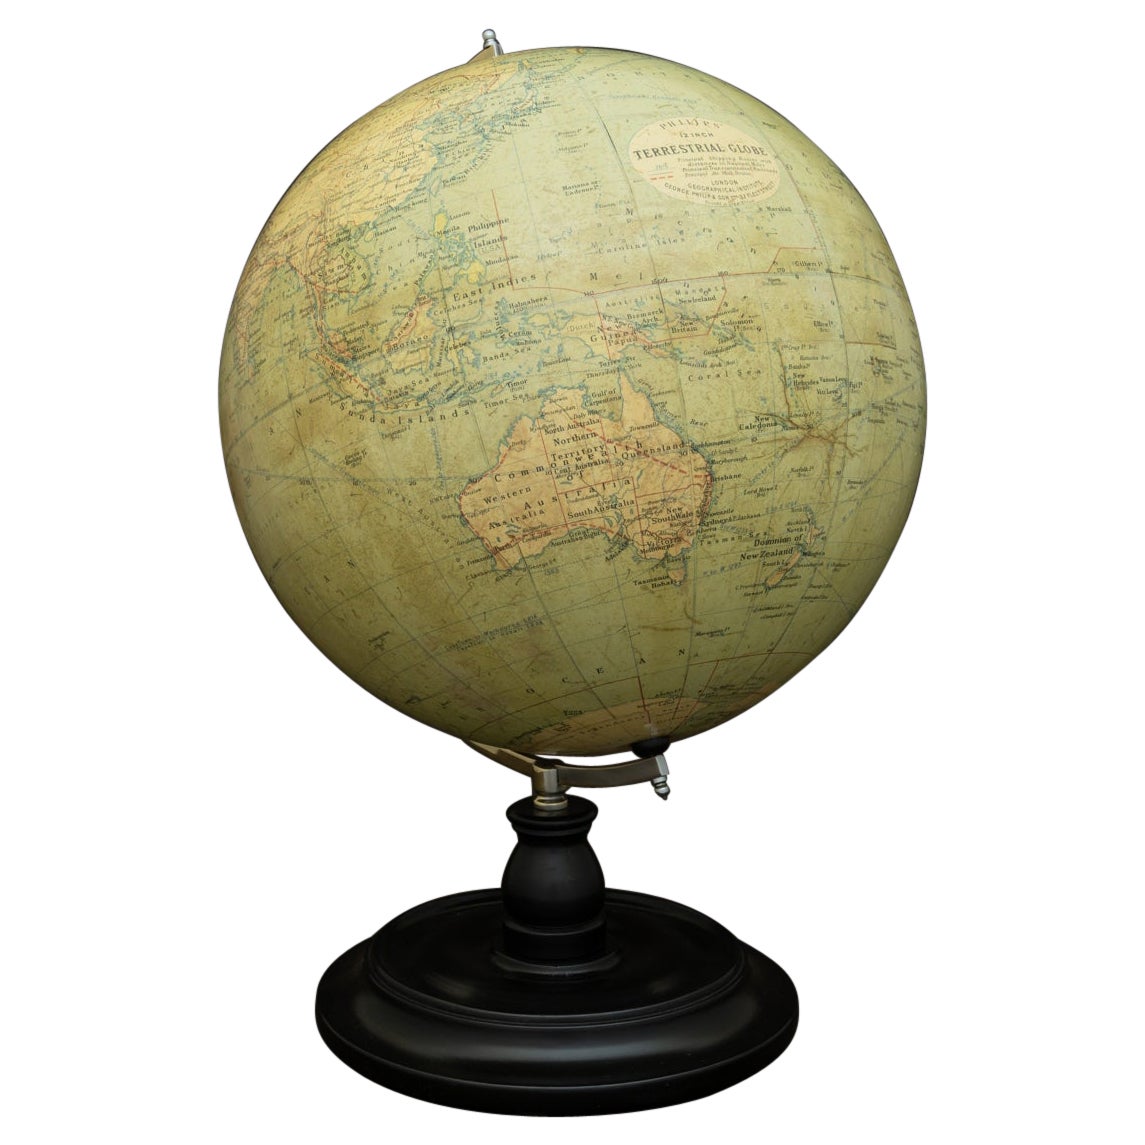 Philips' Terrestrial Globe, circa 1925